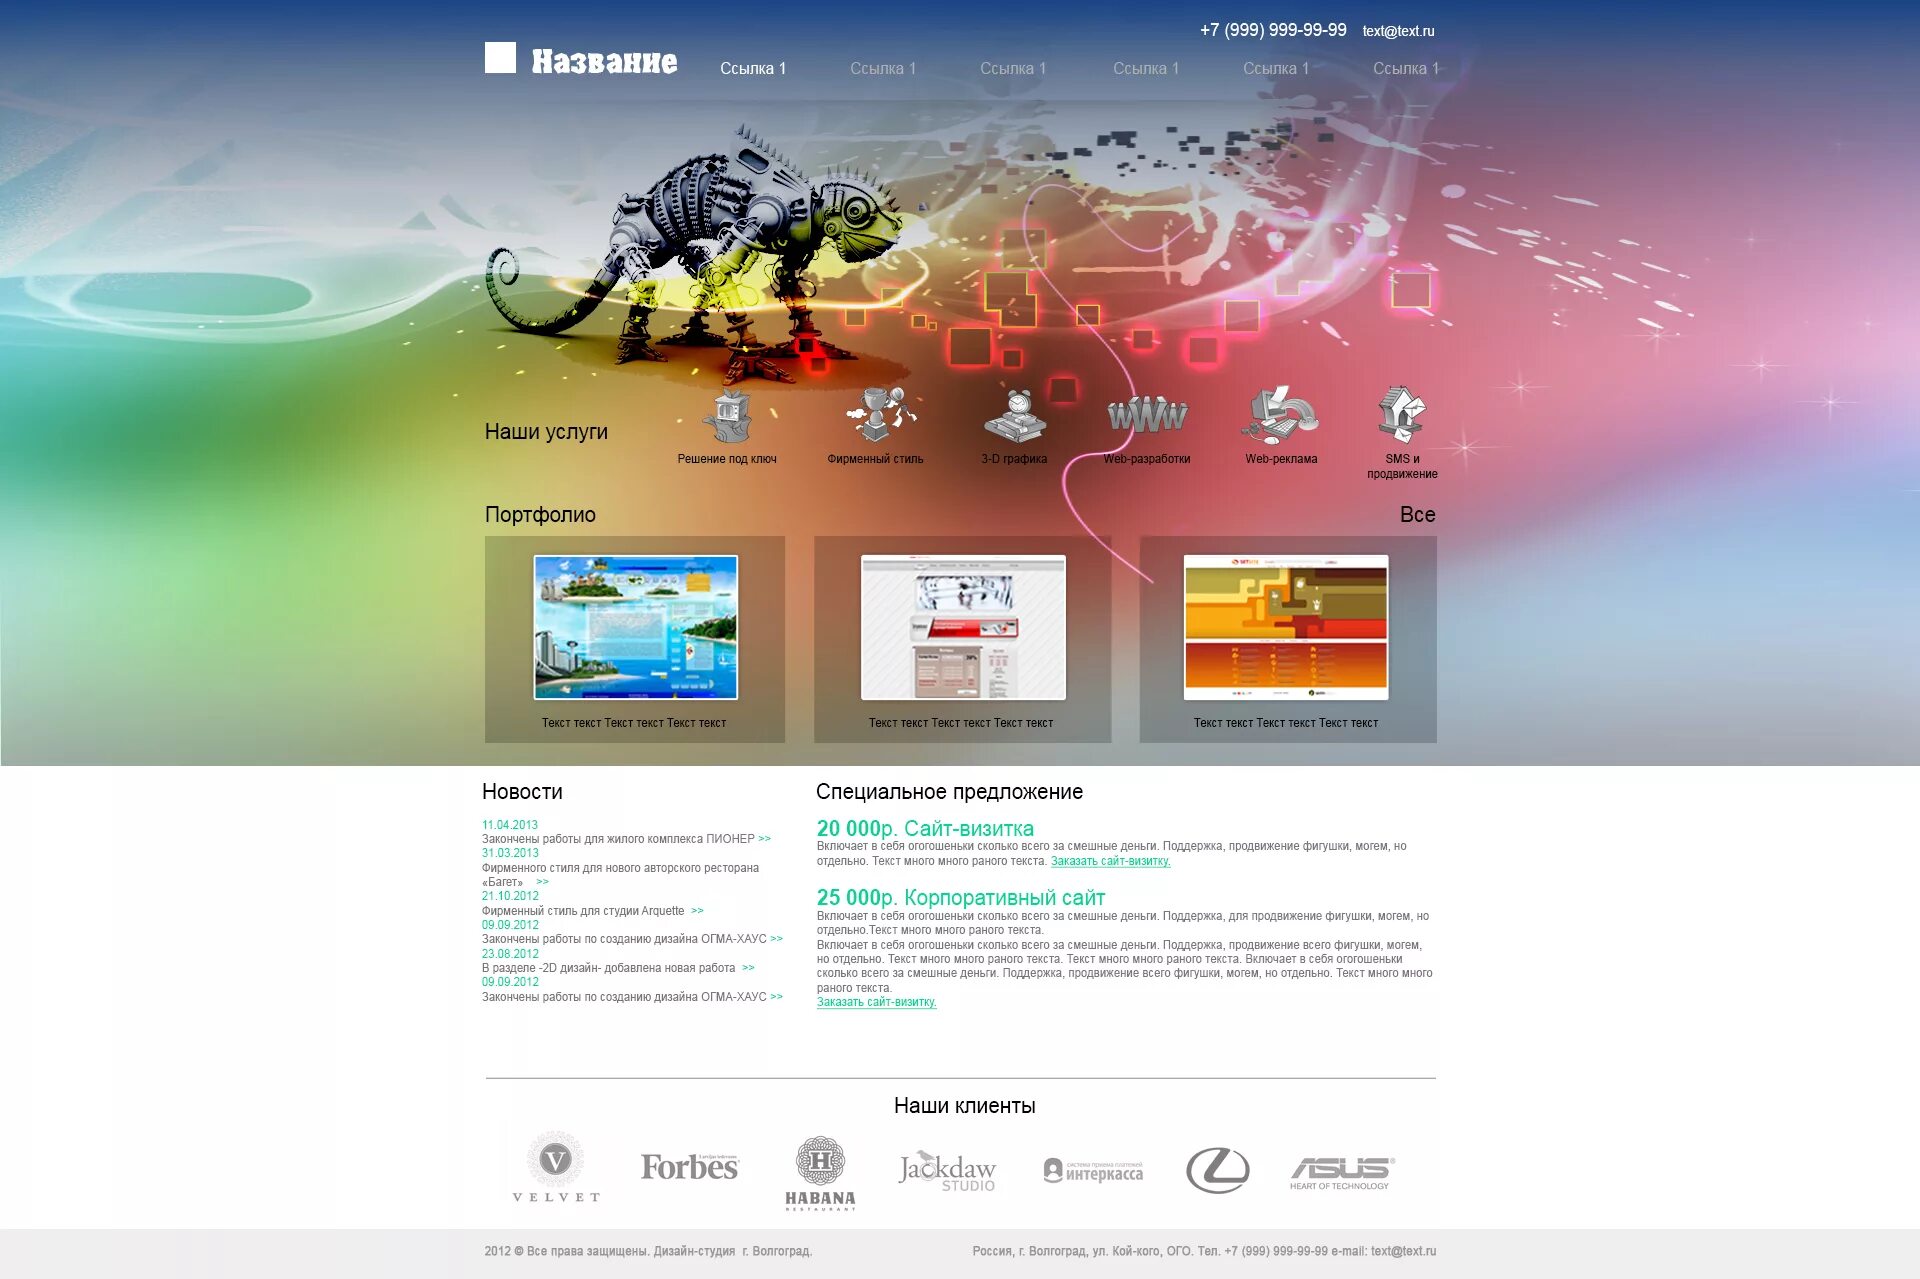 Product site ru. Дизайн сайта шаблоны. Красивые макеты сайтов. Макет веб сайта. Шаблон веб сайта.